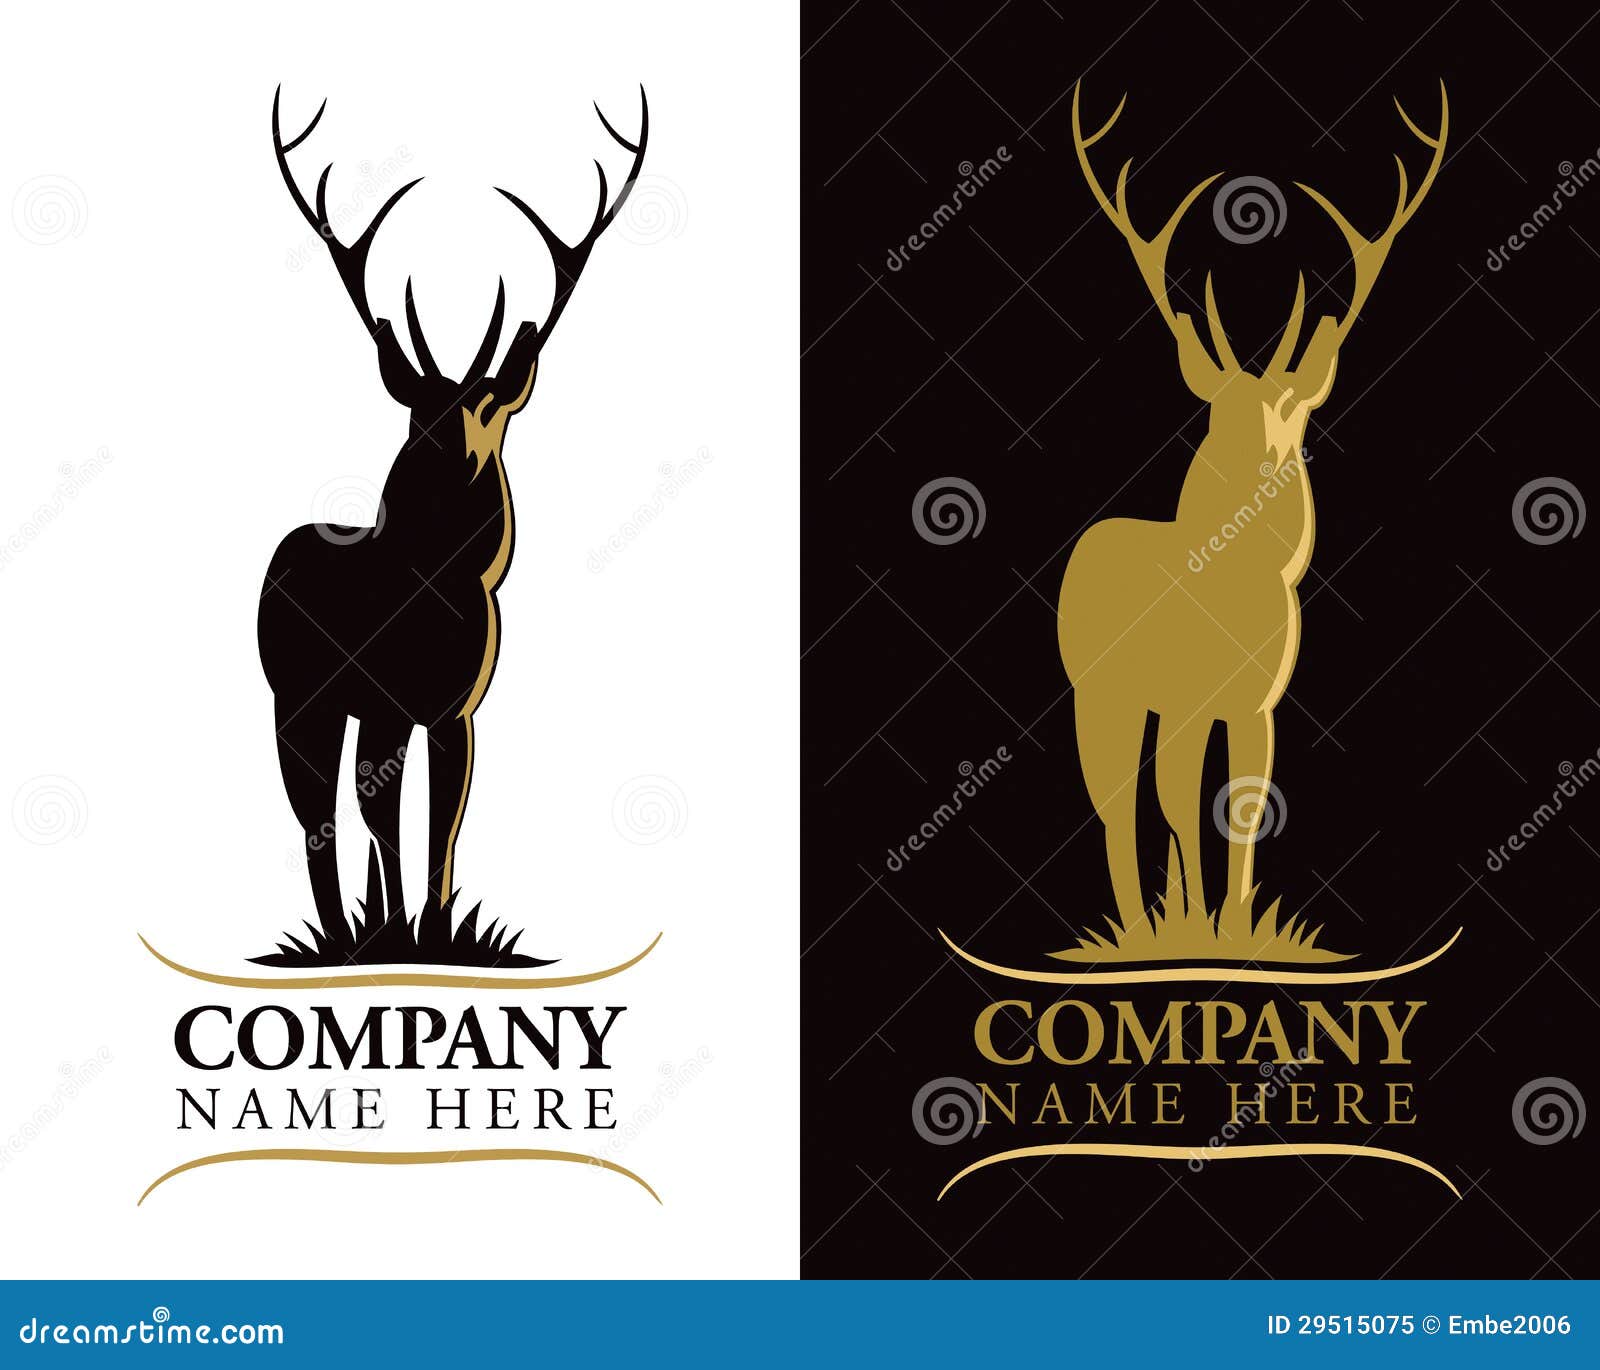 stag deer logo